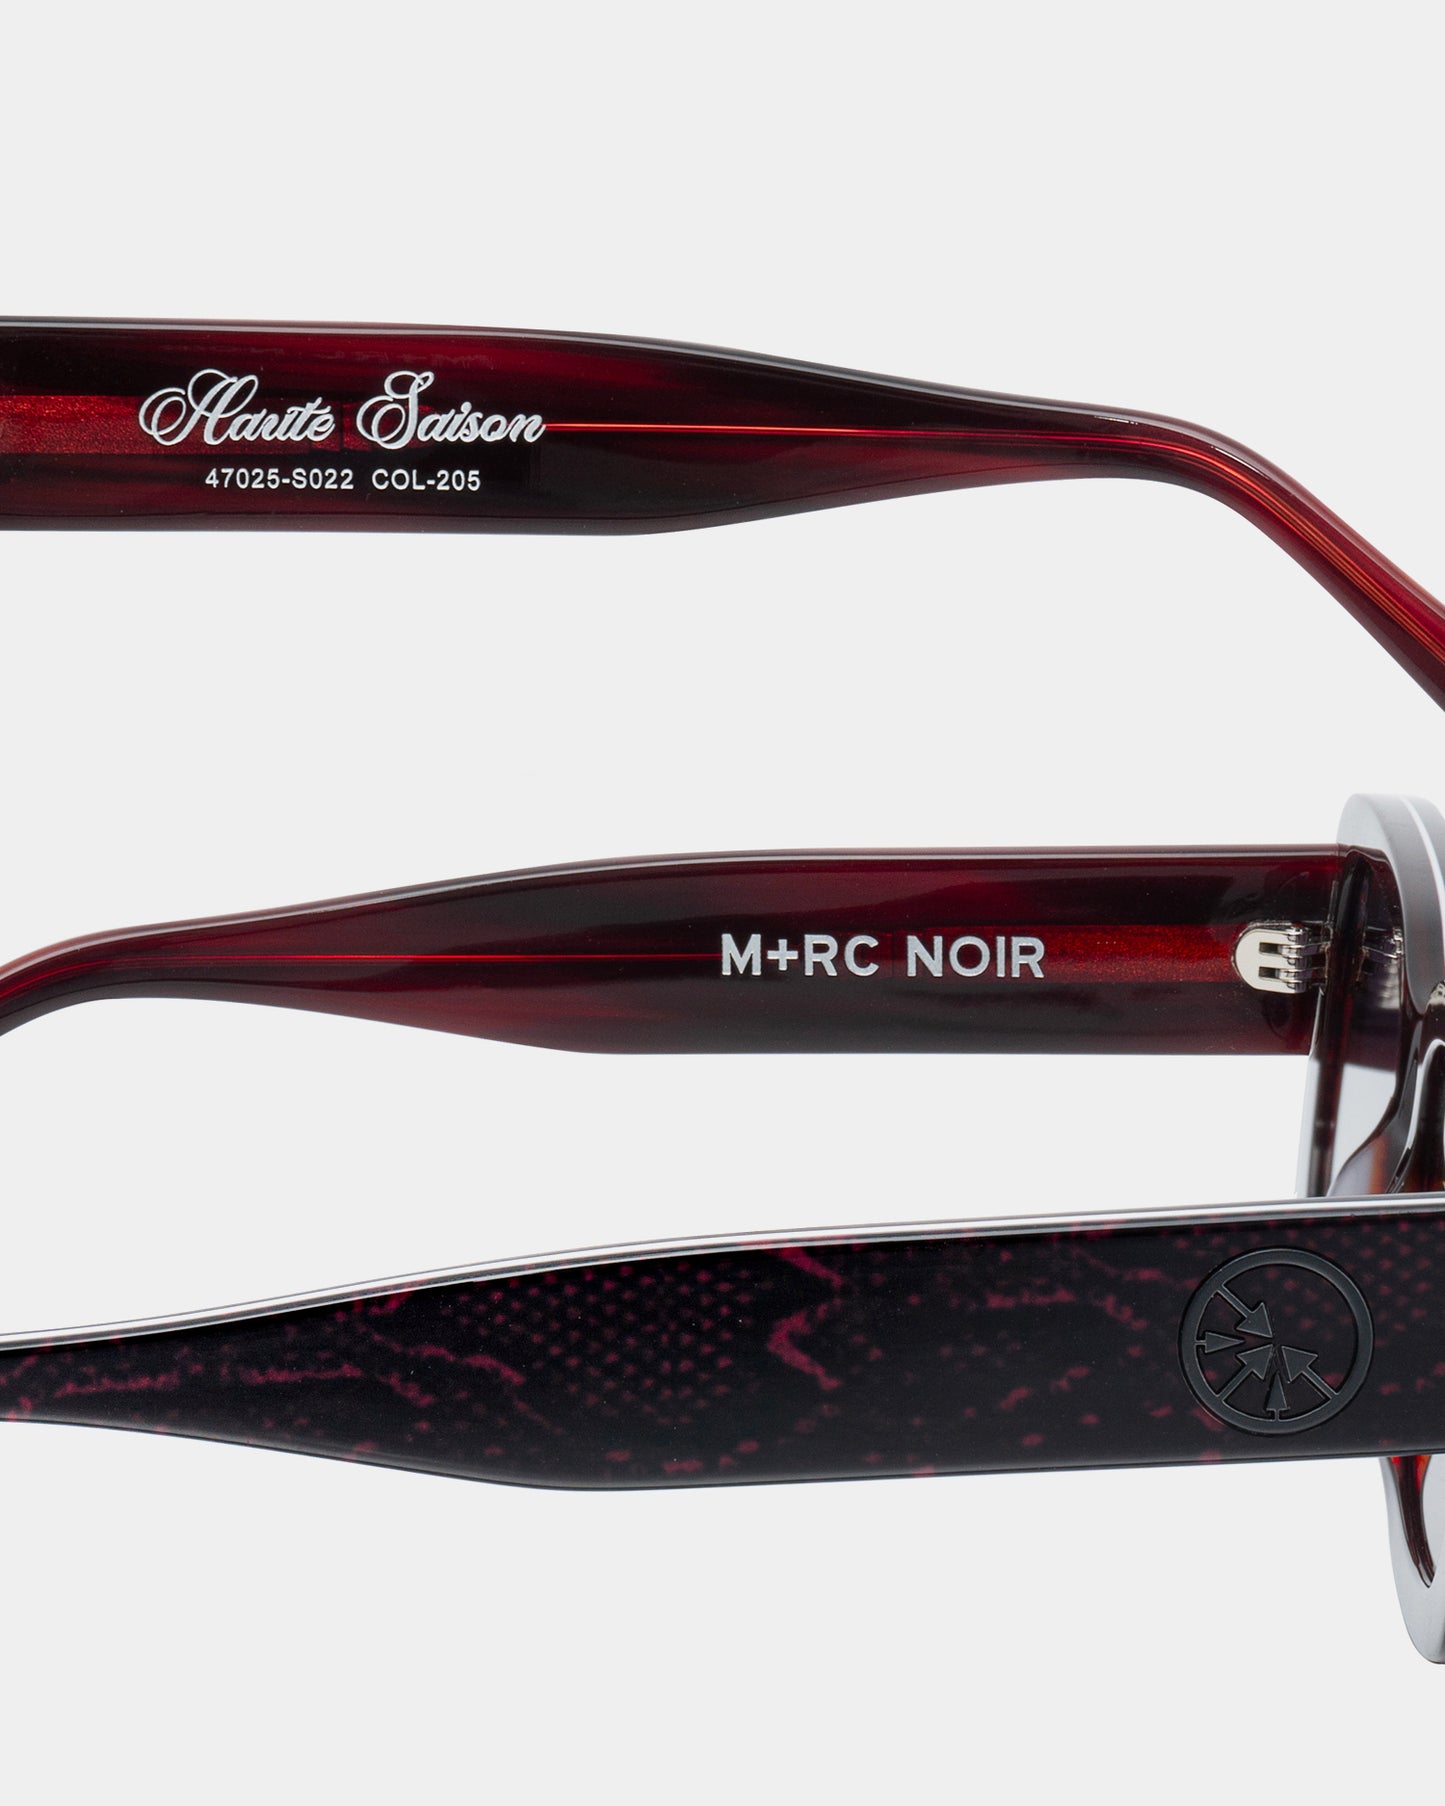 "Haute-saison" Red Snake Sunglasses